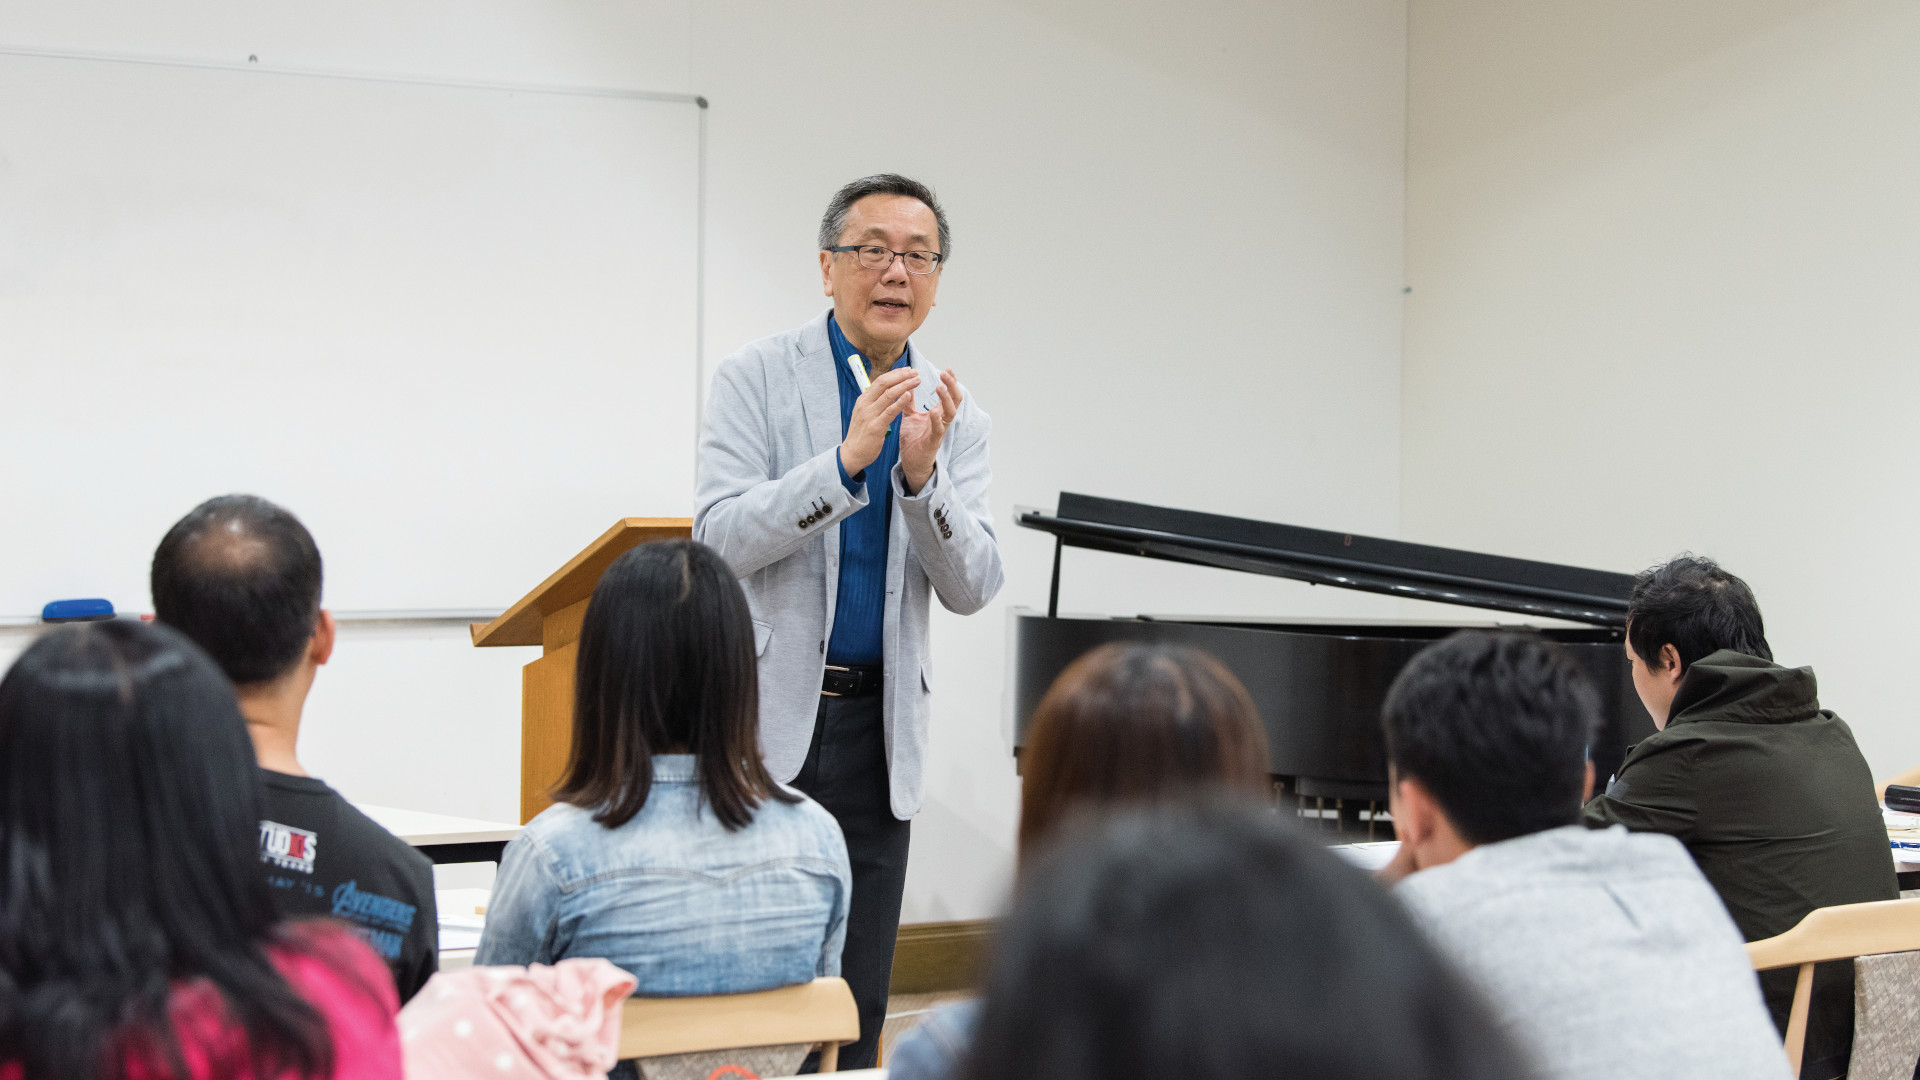 Justin Tan teaching a class